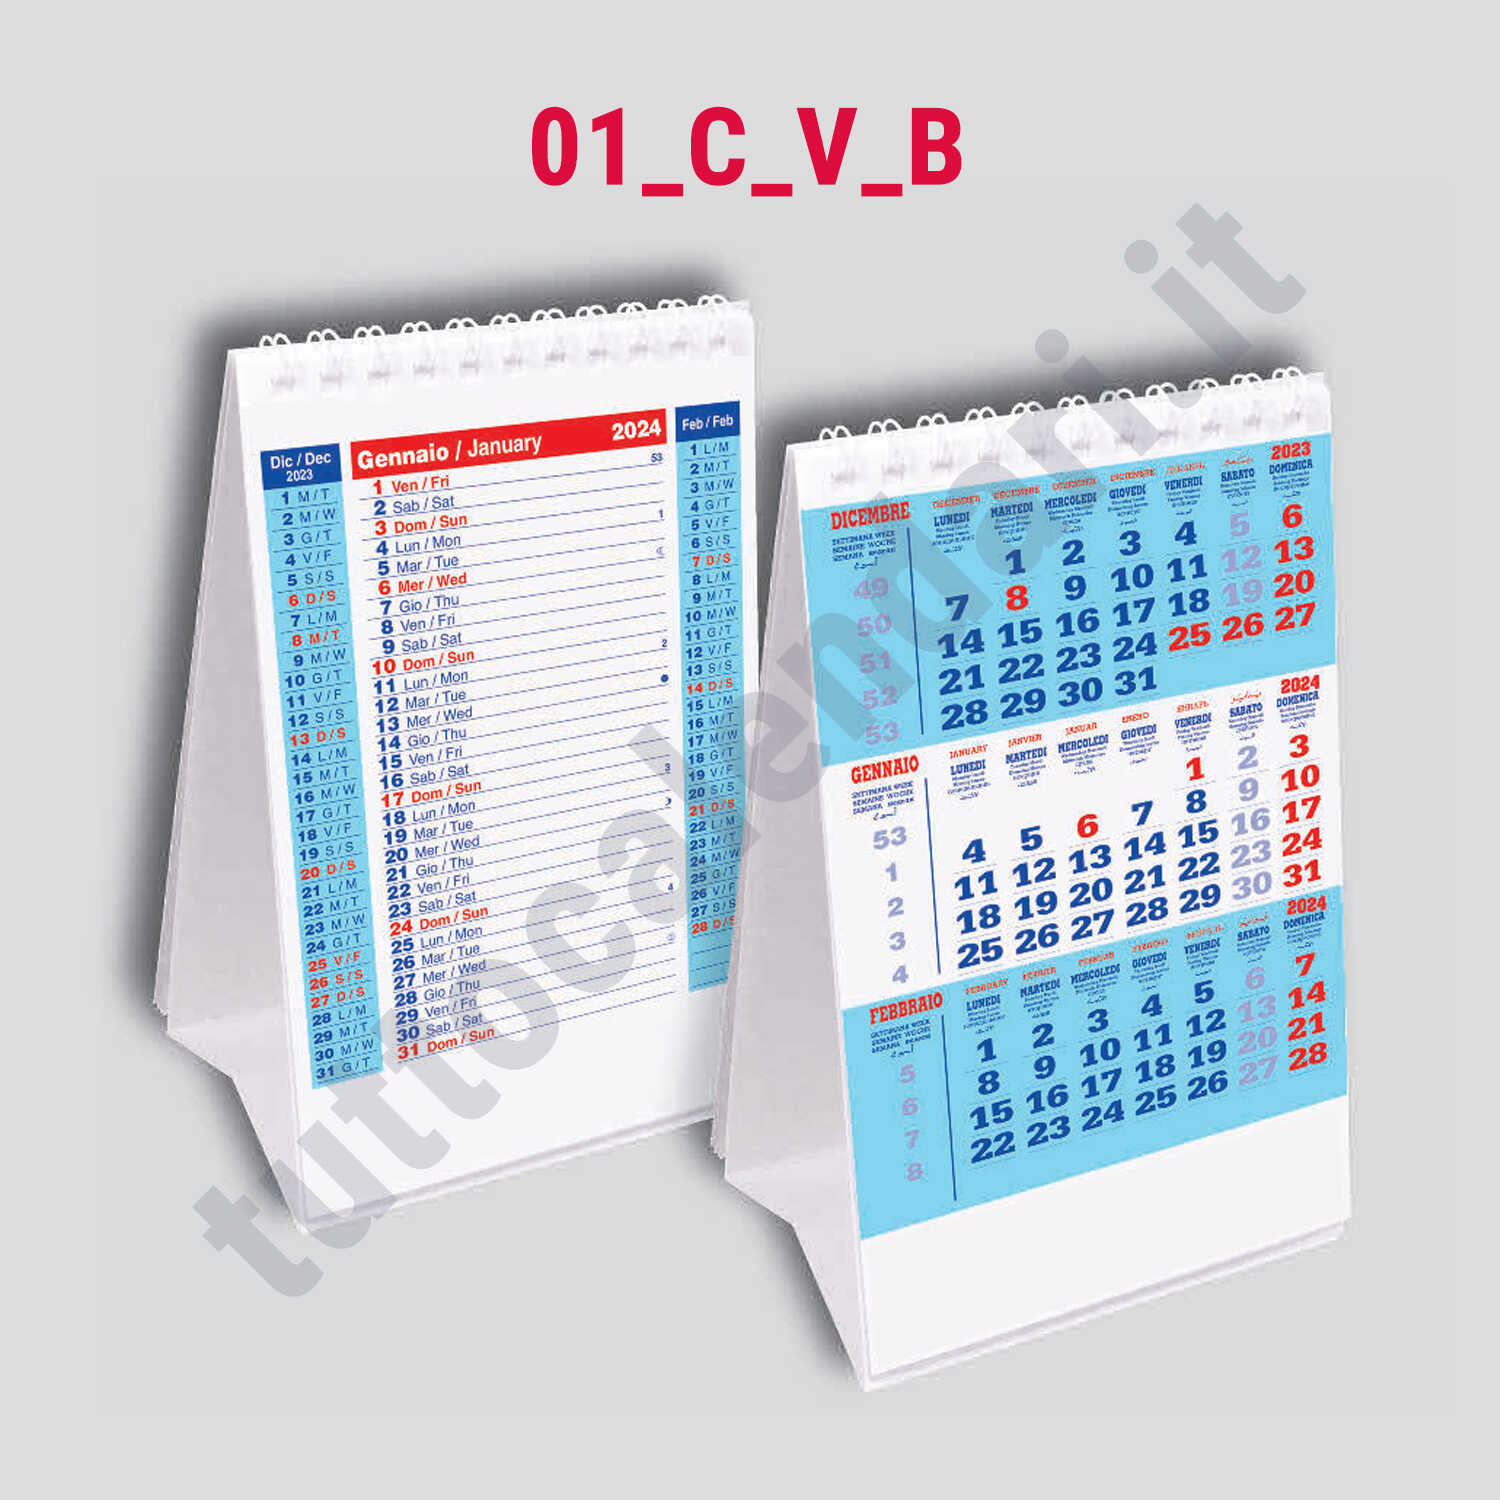 Stampa calendario verticale da banco